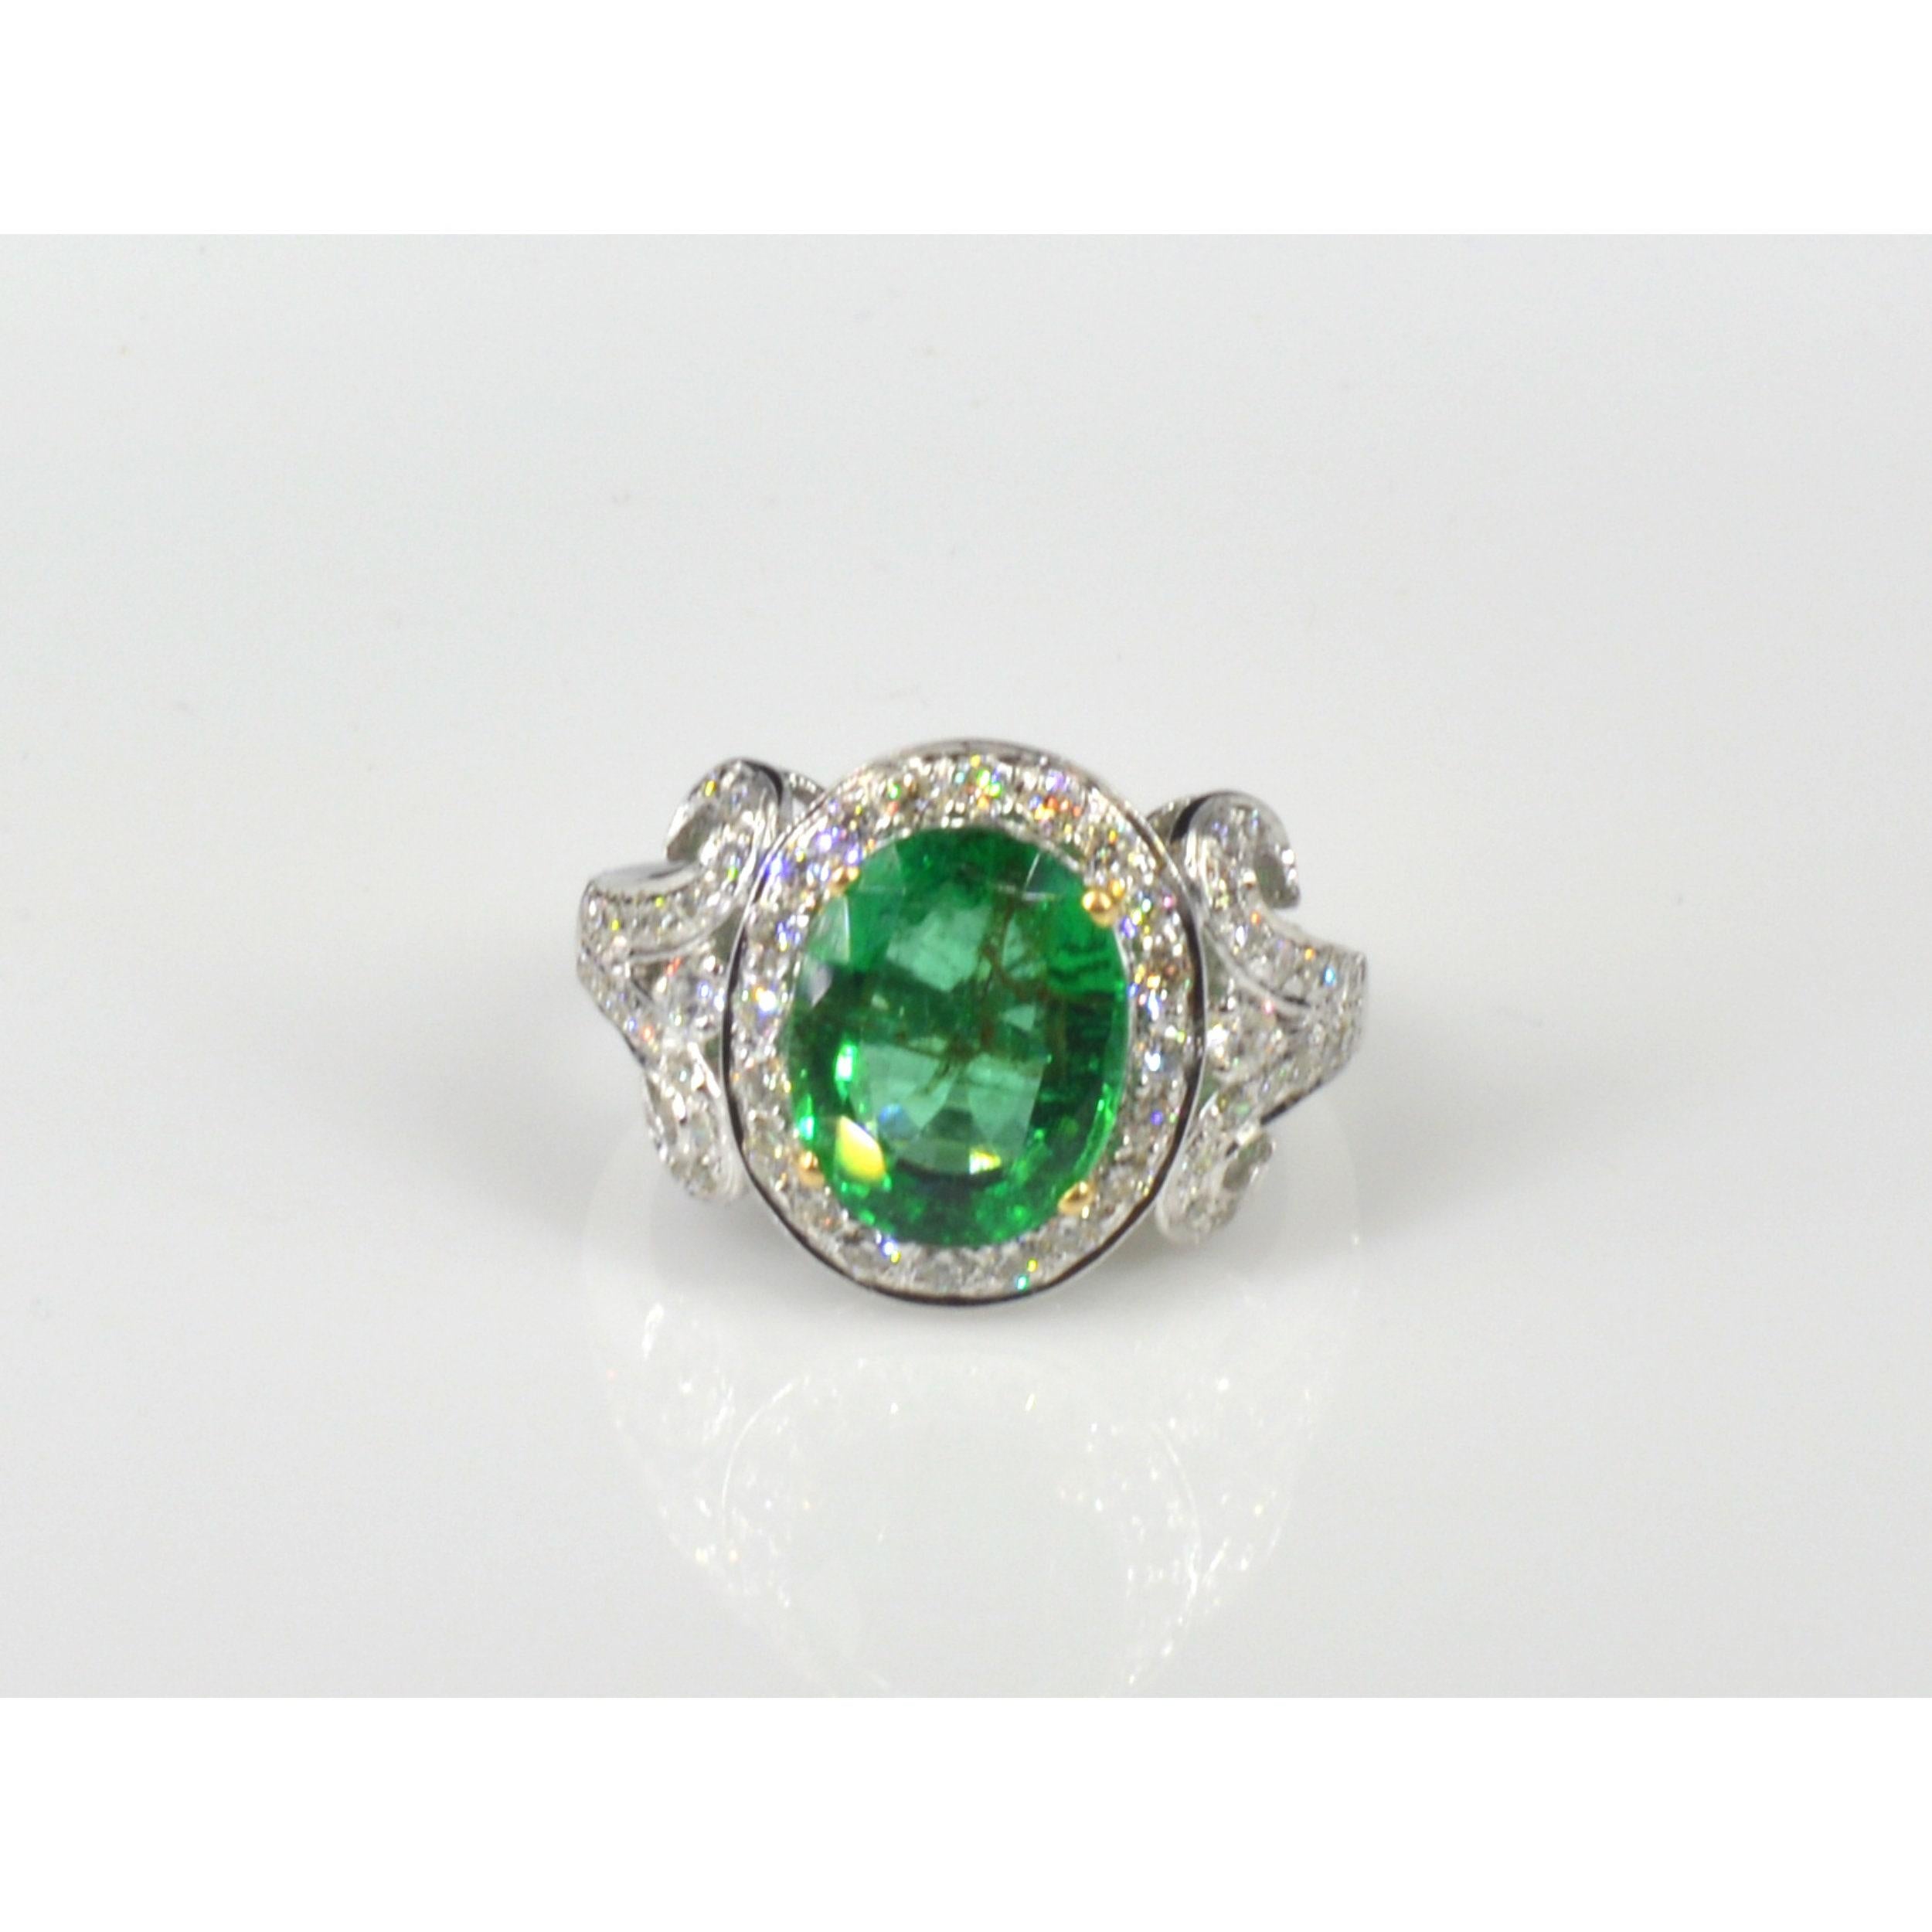 For Sale:  Antique 3 Carat Emerald Diamond Engagement Ring, Art Deco Diamond Wedding Ring 5